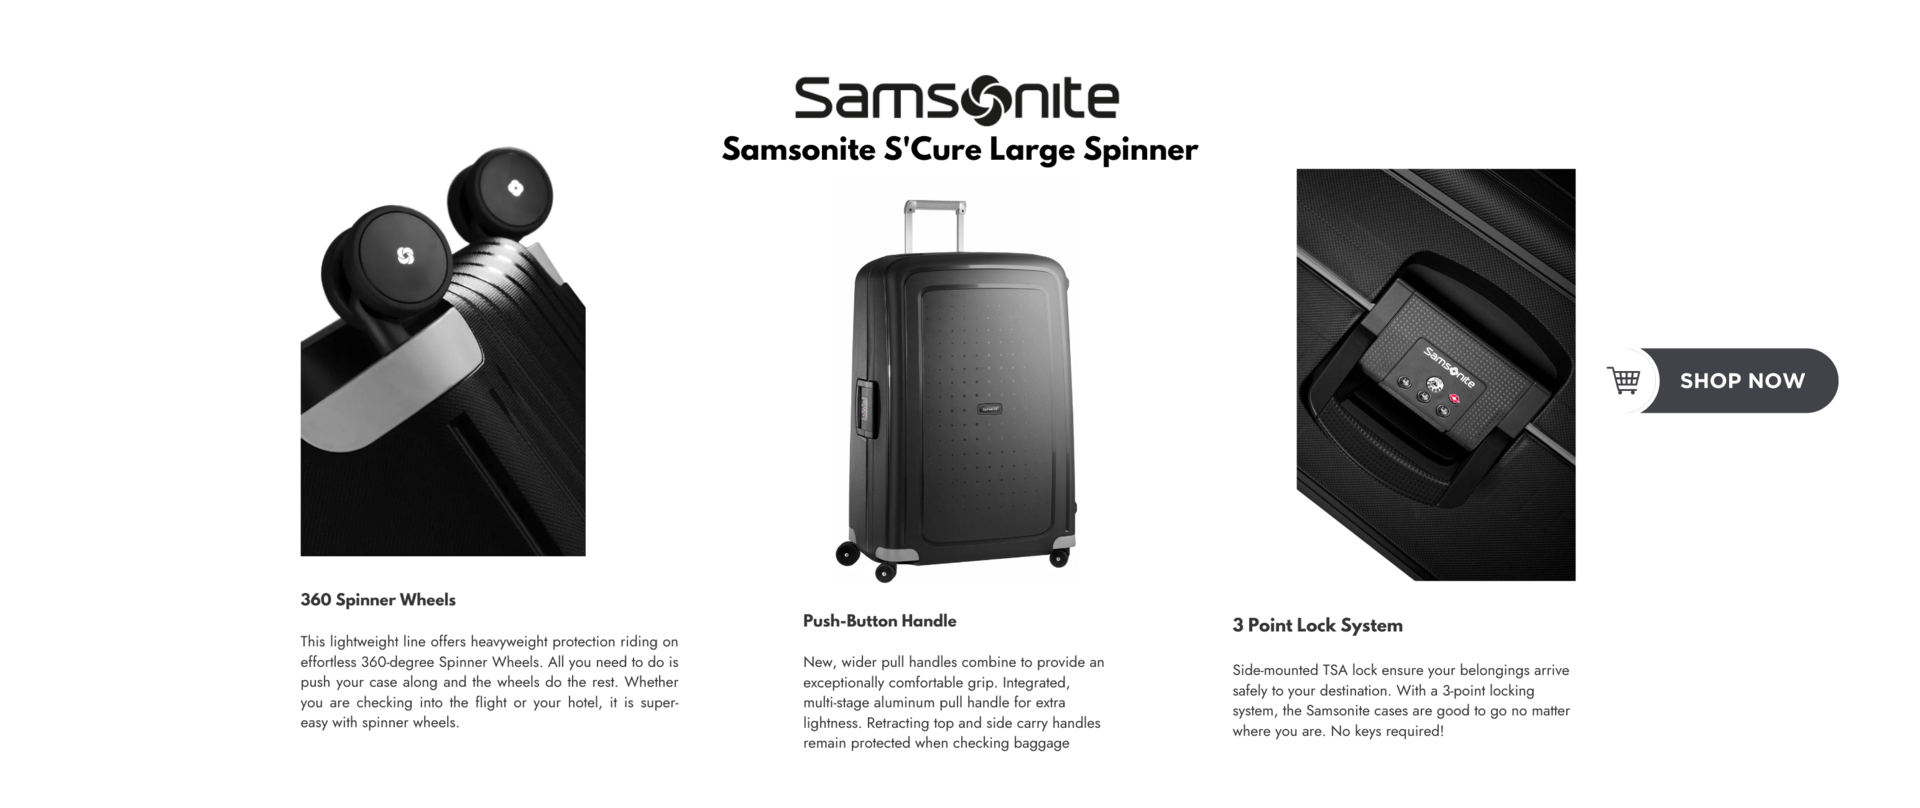 Samsonite S'Cure Large Spinner